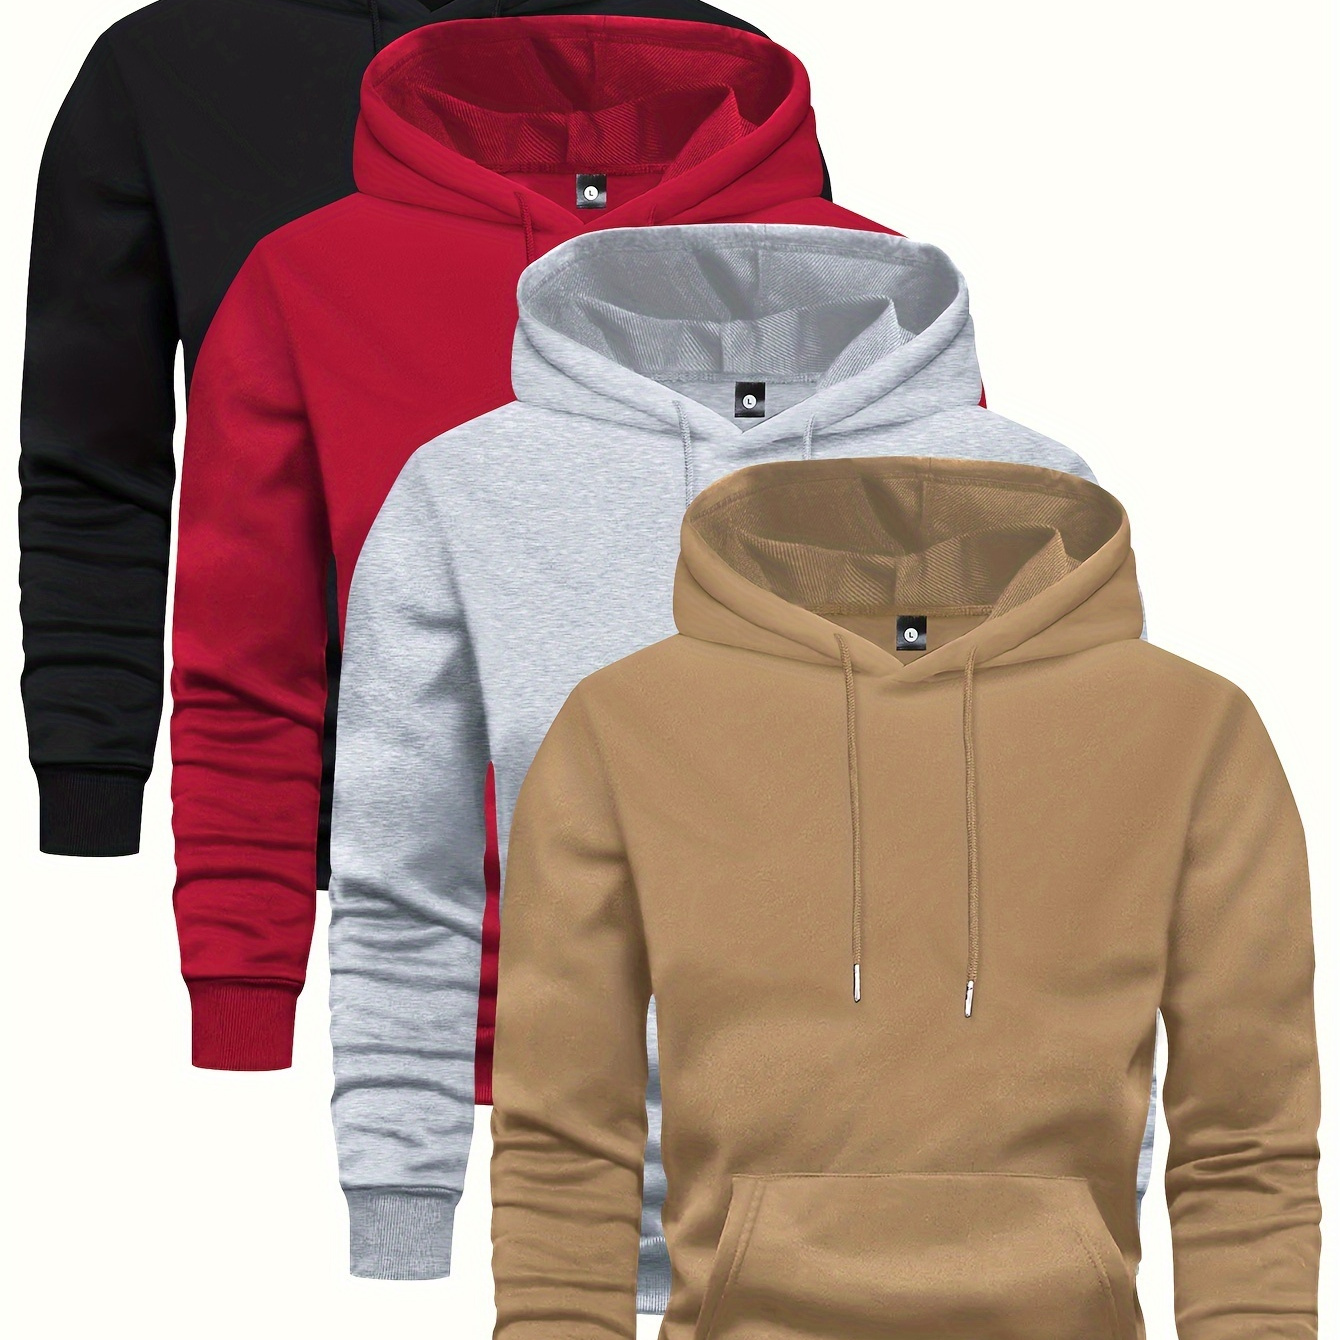 

4 Pcs Men's Solid Hoodie With Kangaroo Pocket, Casual Long Sleeve Hooded Sweatshirt For Outdoor